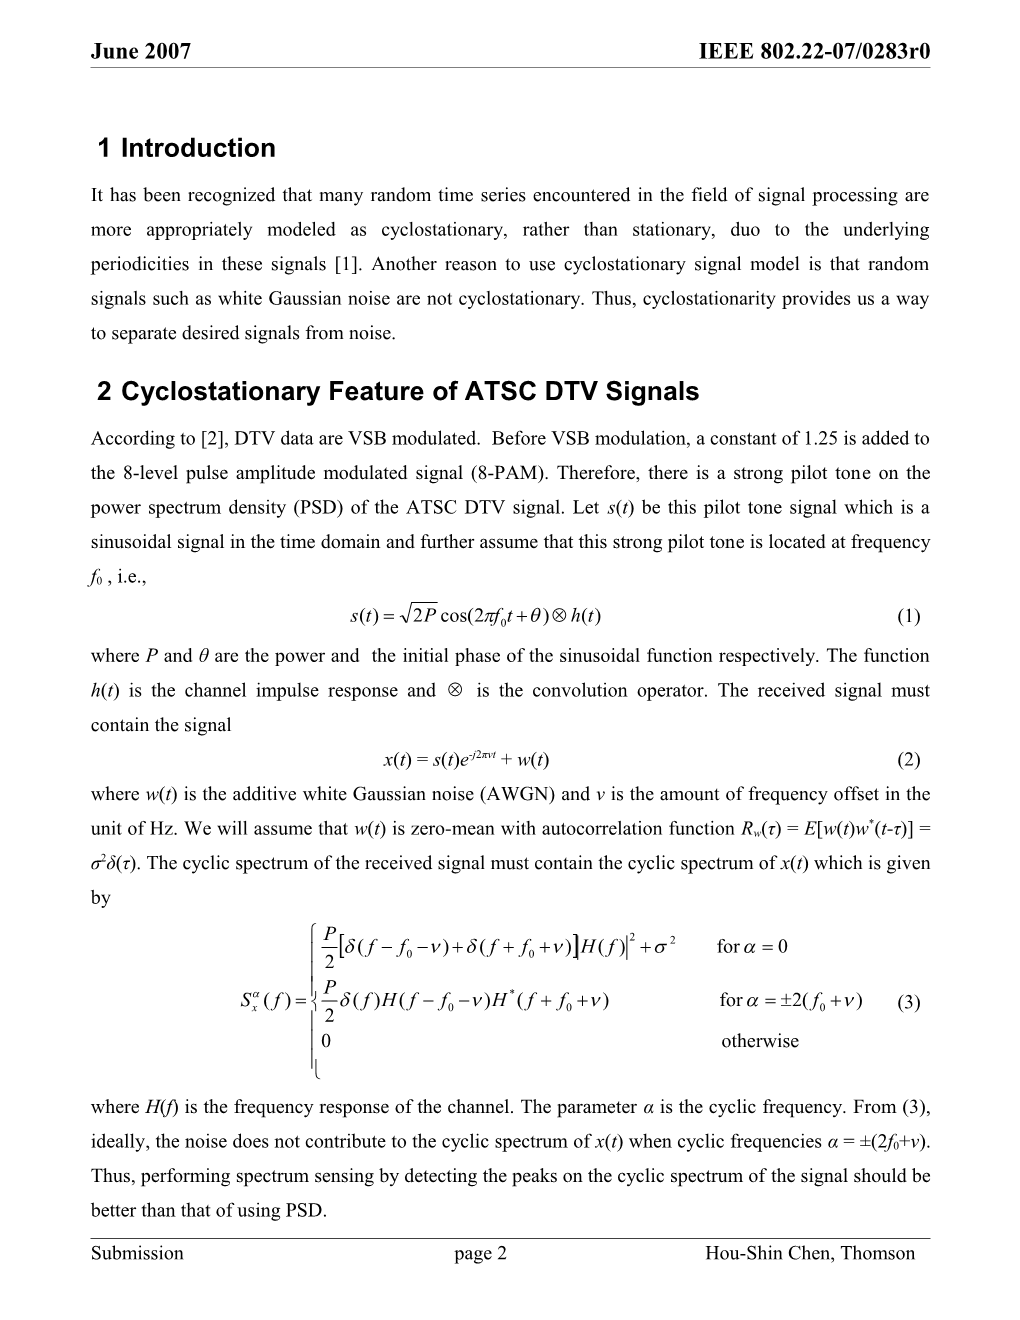 2Cyclostationary Featureof ATSC DTV Signals